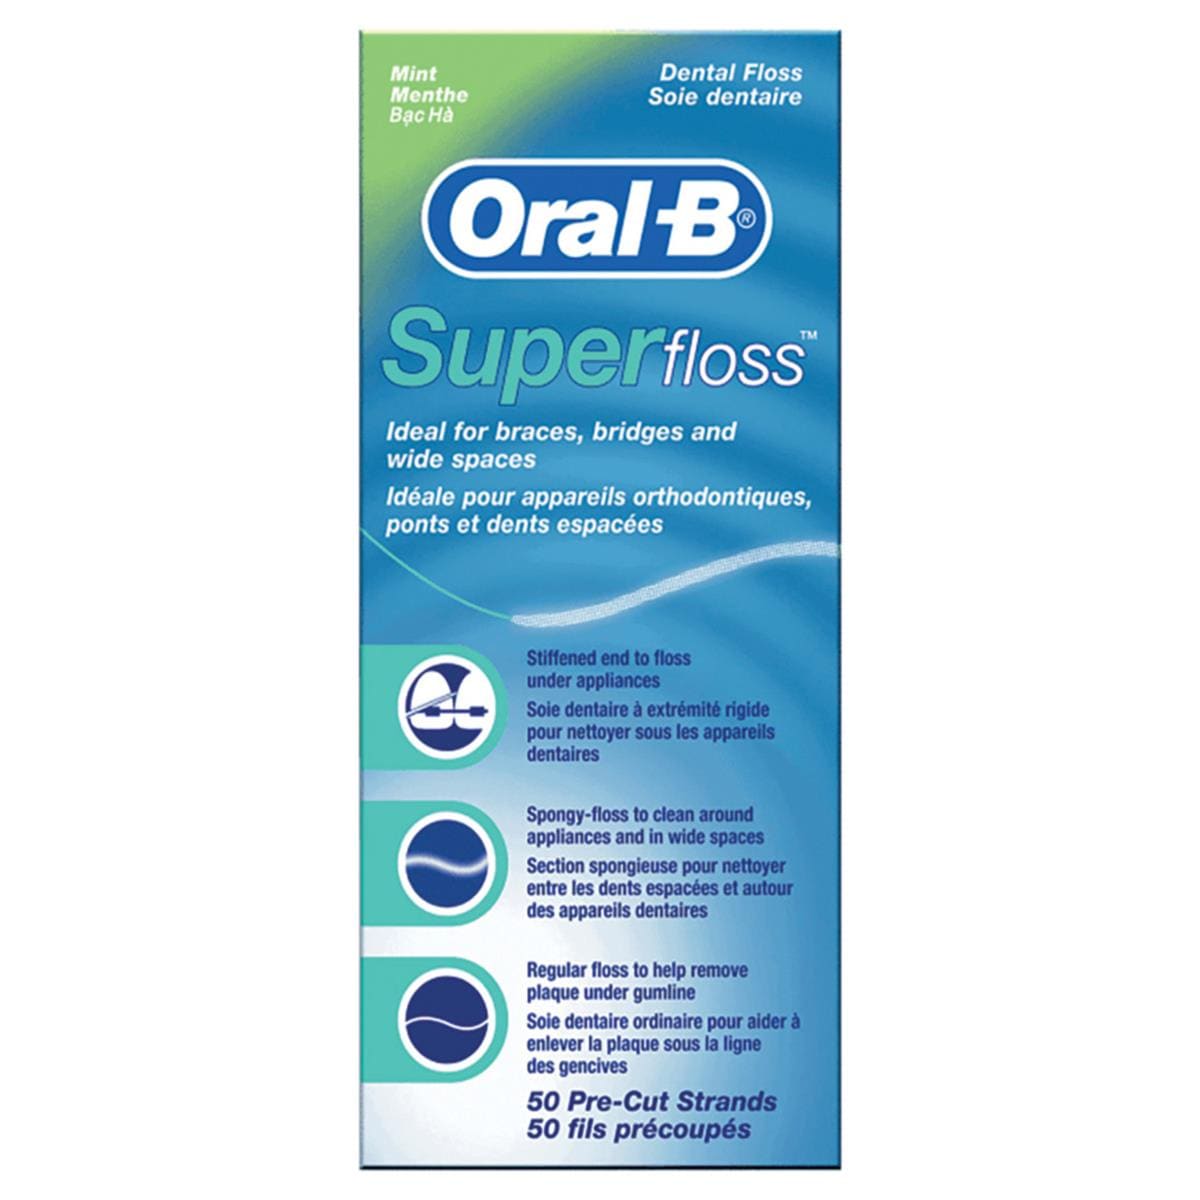 Oral-B Superfloss 50 Strands Mint 12pk